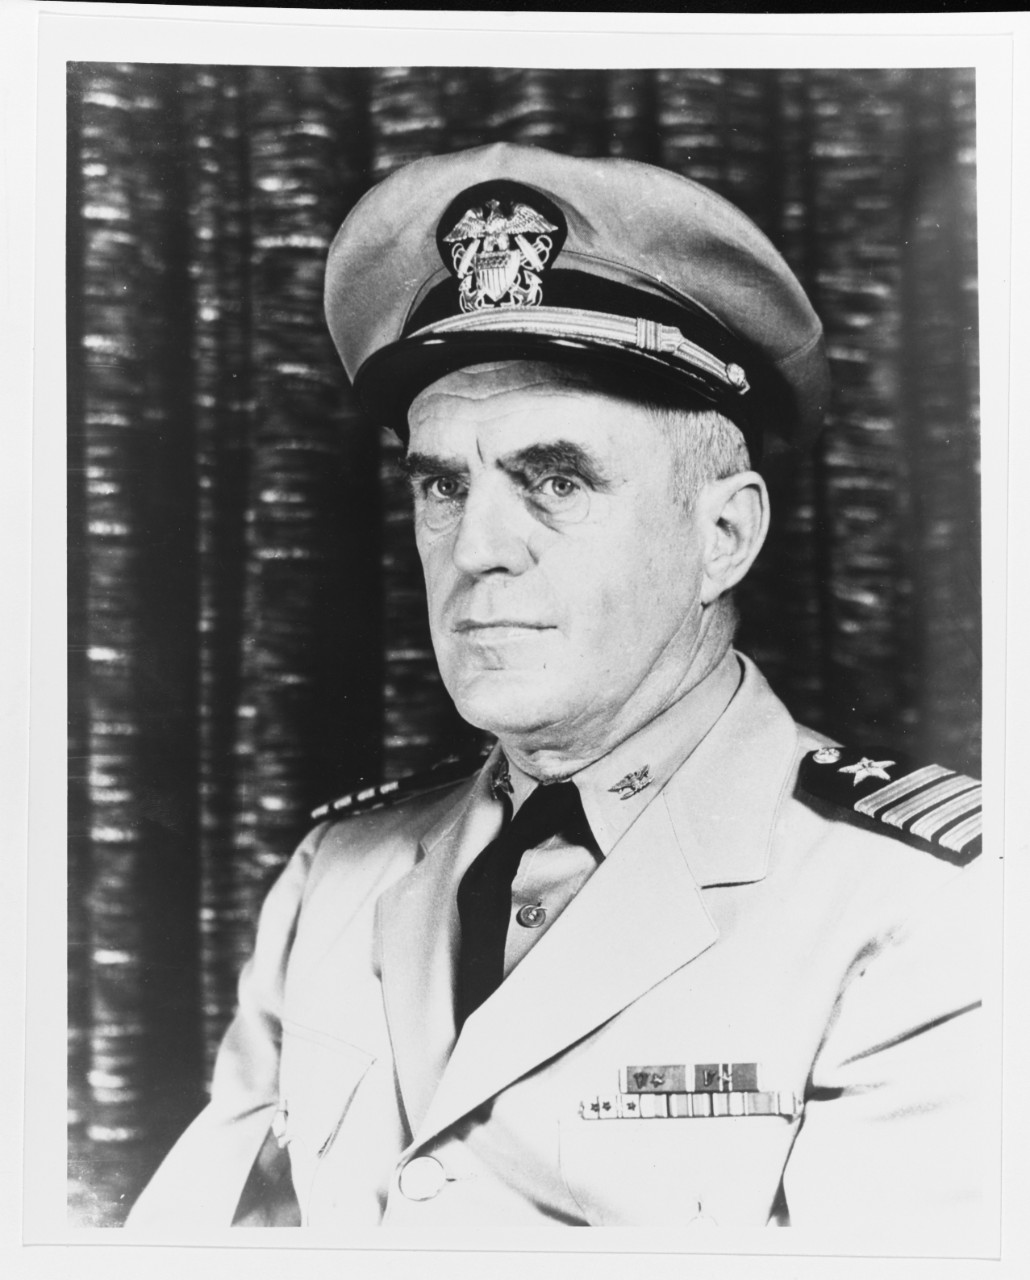 Captain Philip D. Gallery, USN